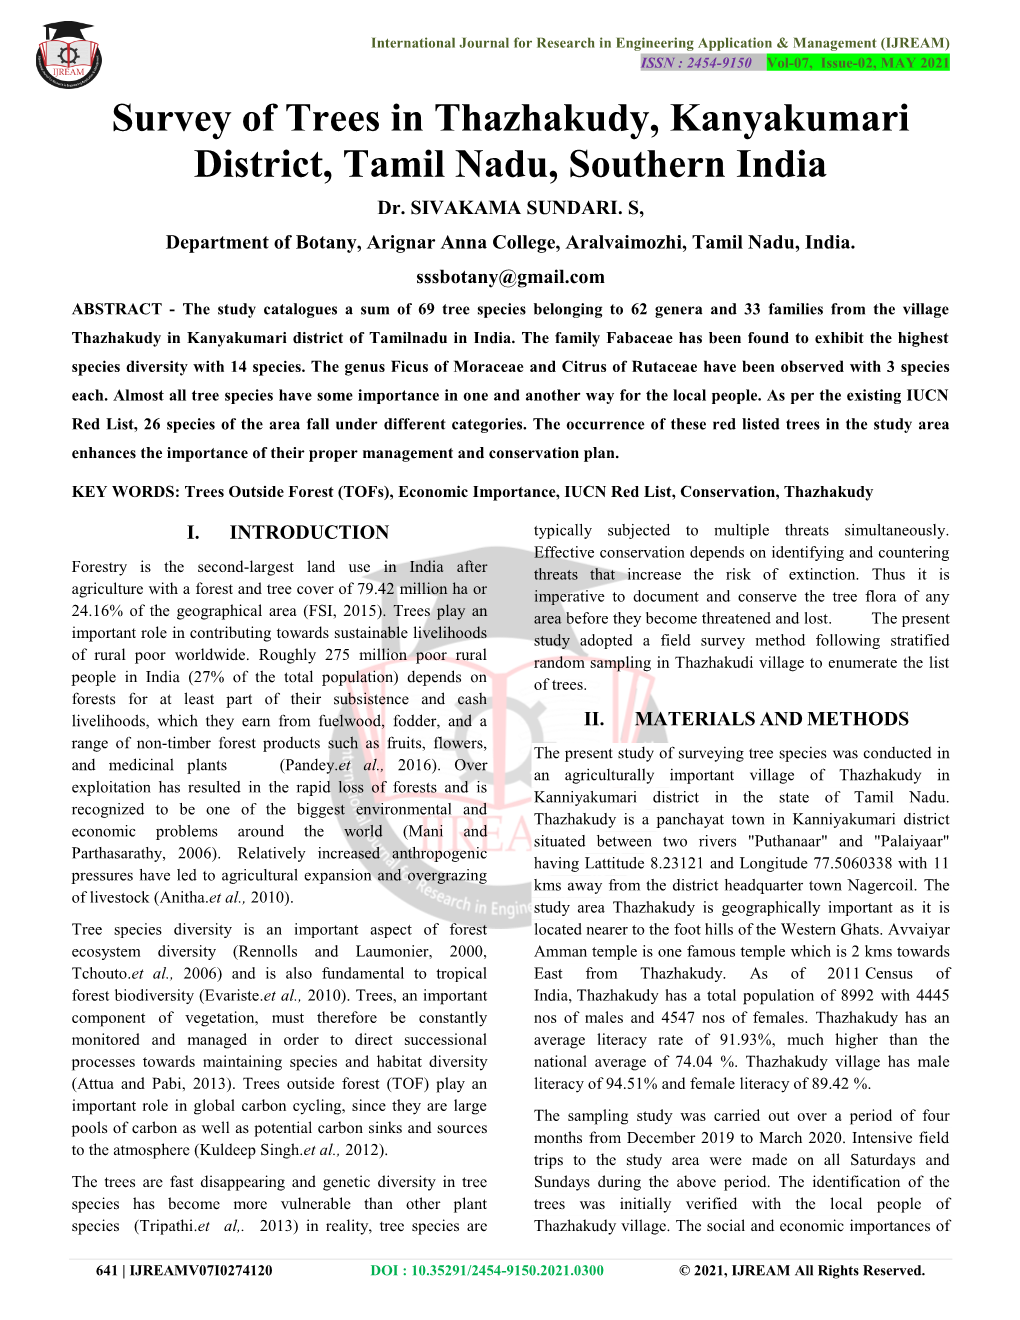 Survey of Trees in Thazhakudy, Kanyakumari District, Tamil Nadu, Southern India Dr